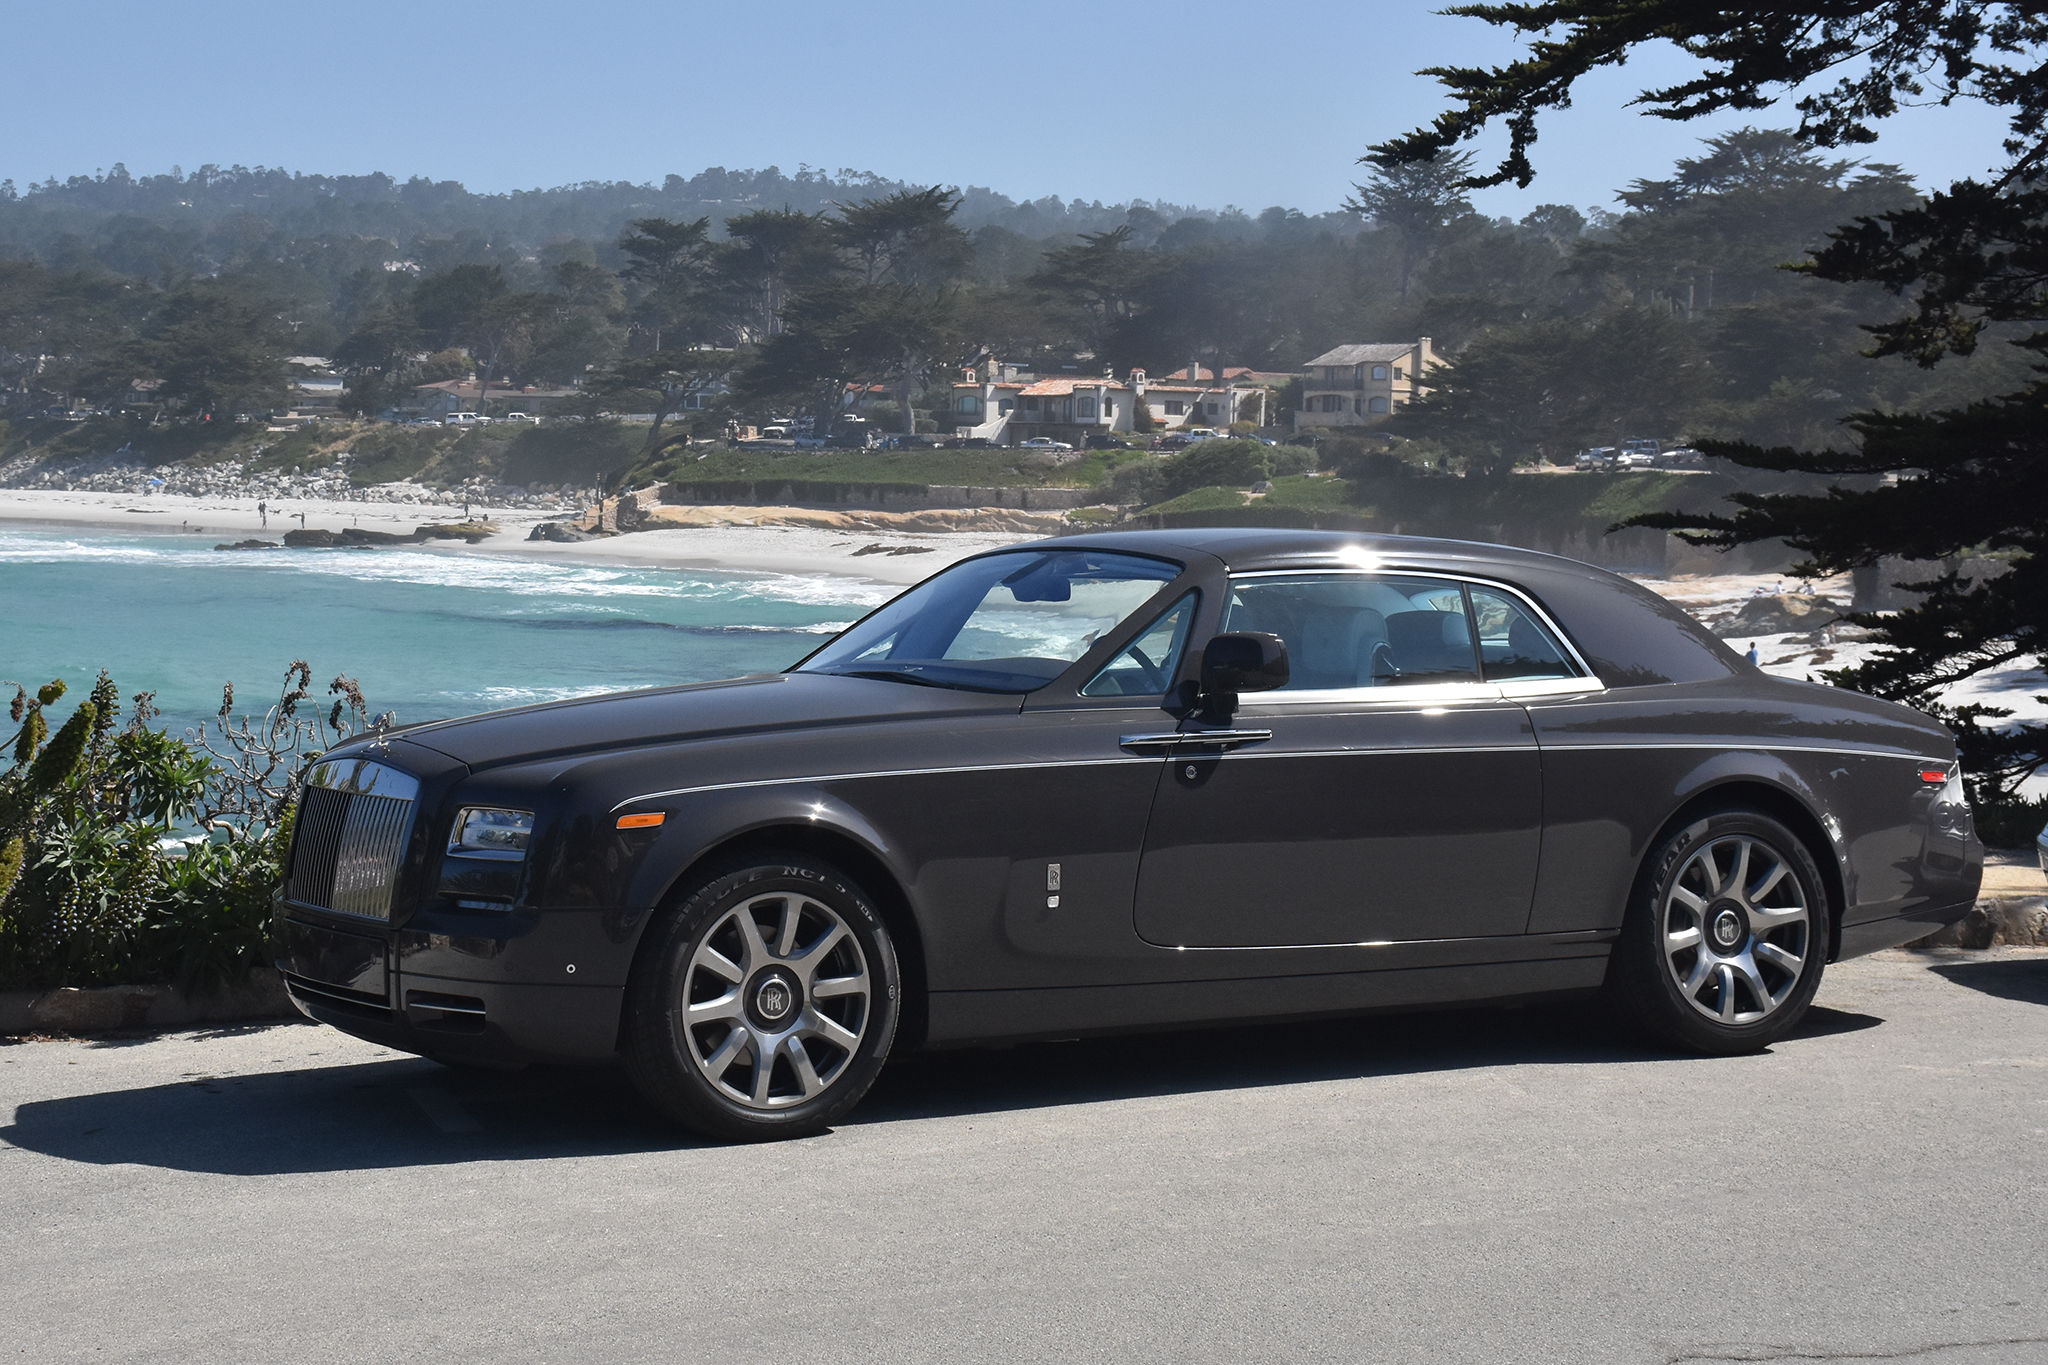 Rolls-Royce Phantom Coupe #6